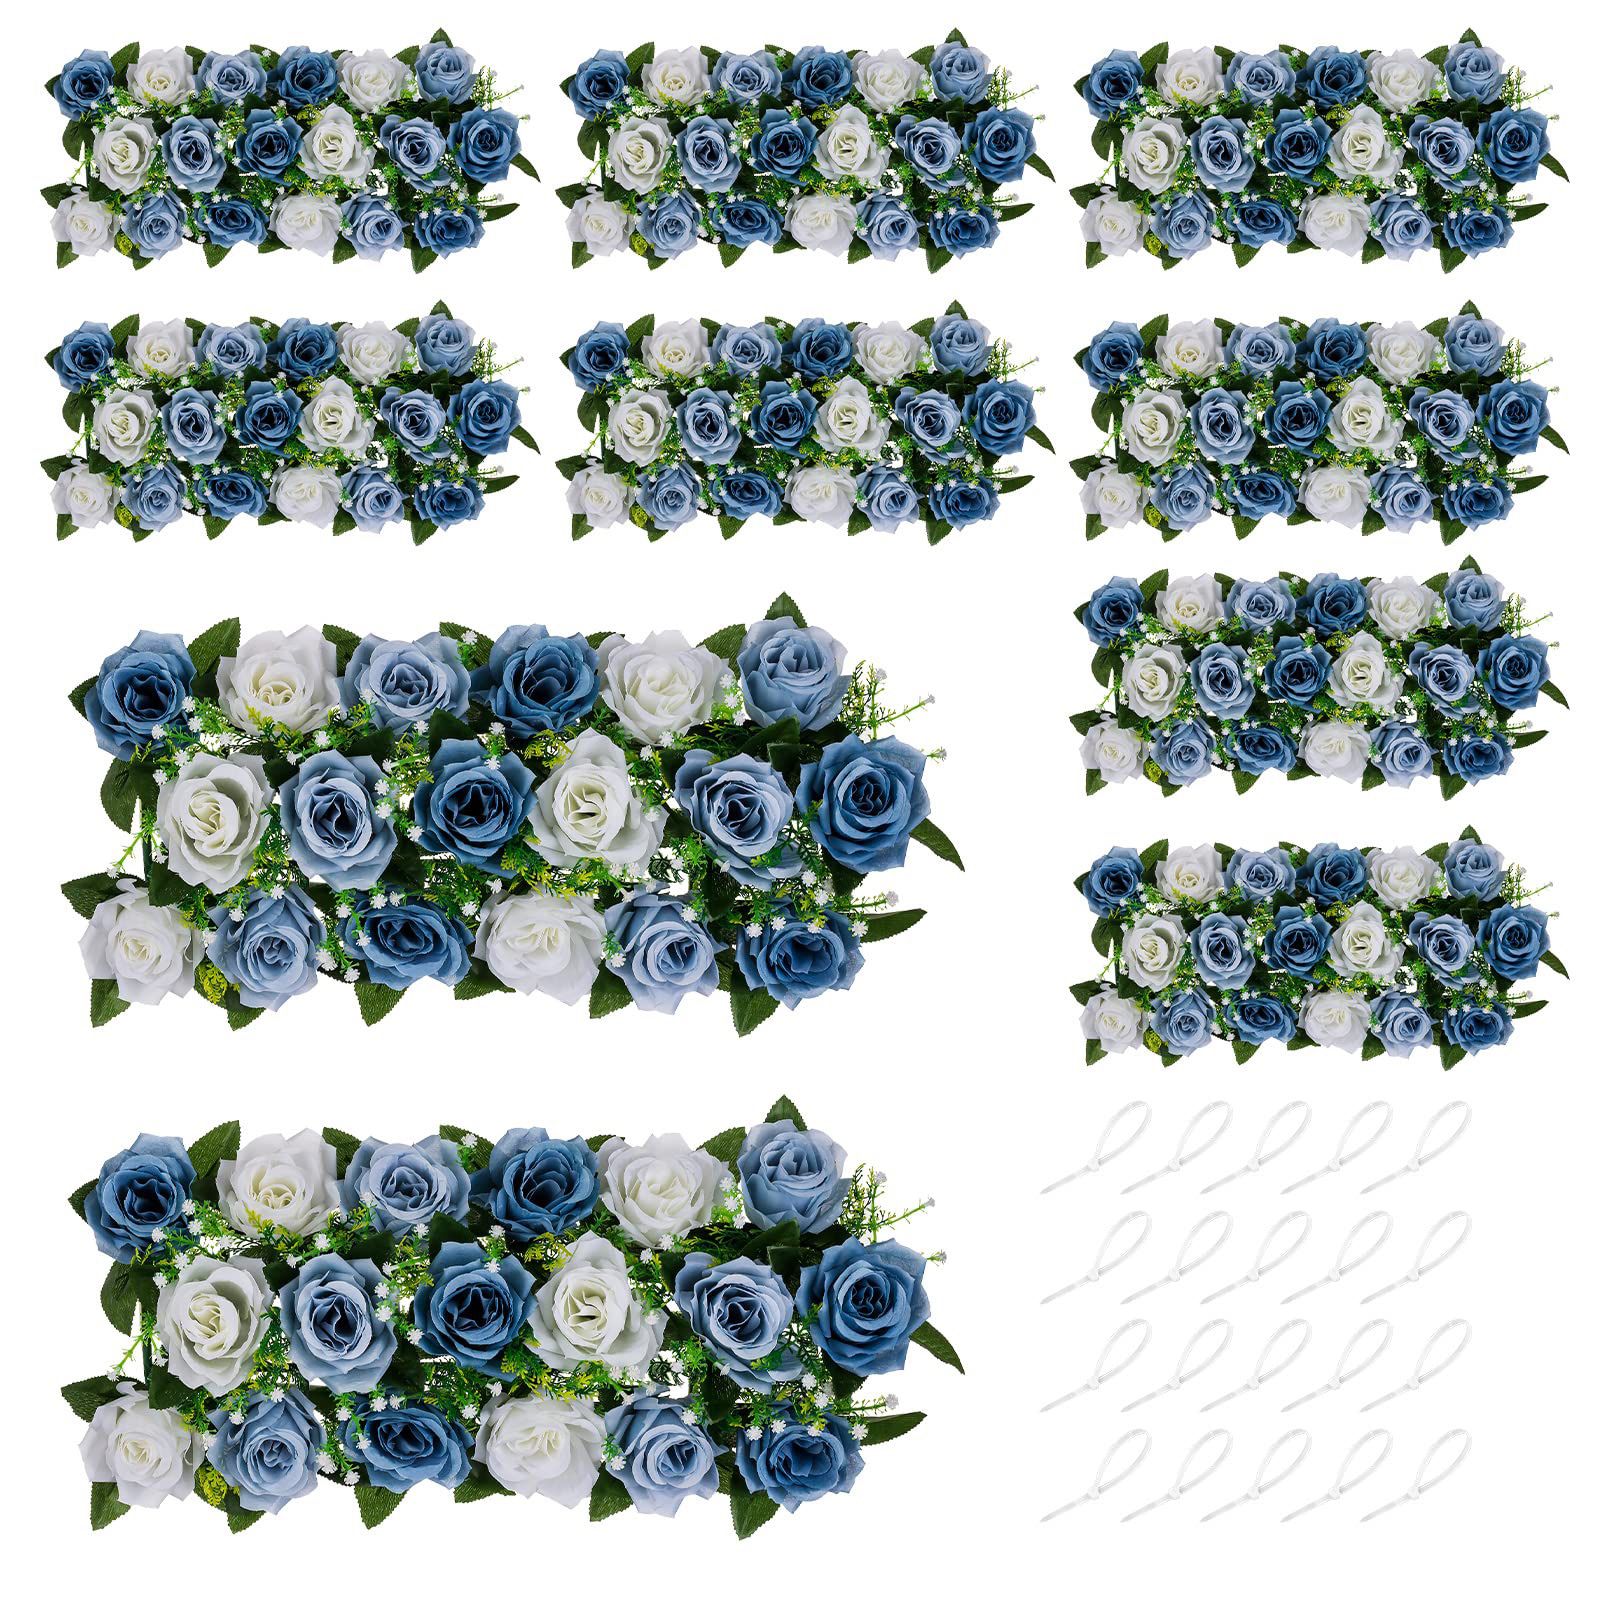 NUPTIO Wedding Floral Centerpieces For Tables - 10 Pcs 19.6in Long Spring Flower Arrangements Artificial Centerpiece, Elegant Dusty Blue Fake Rose Flo